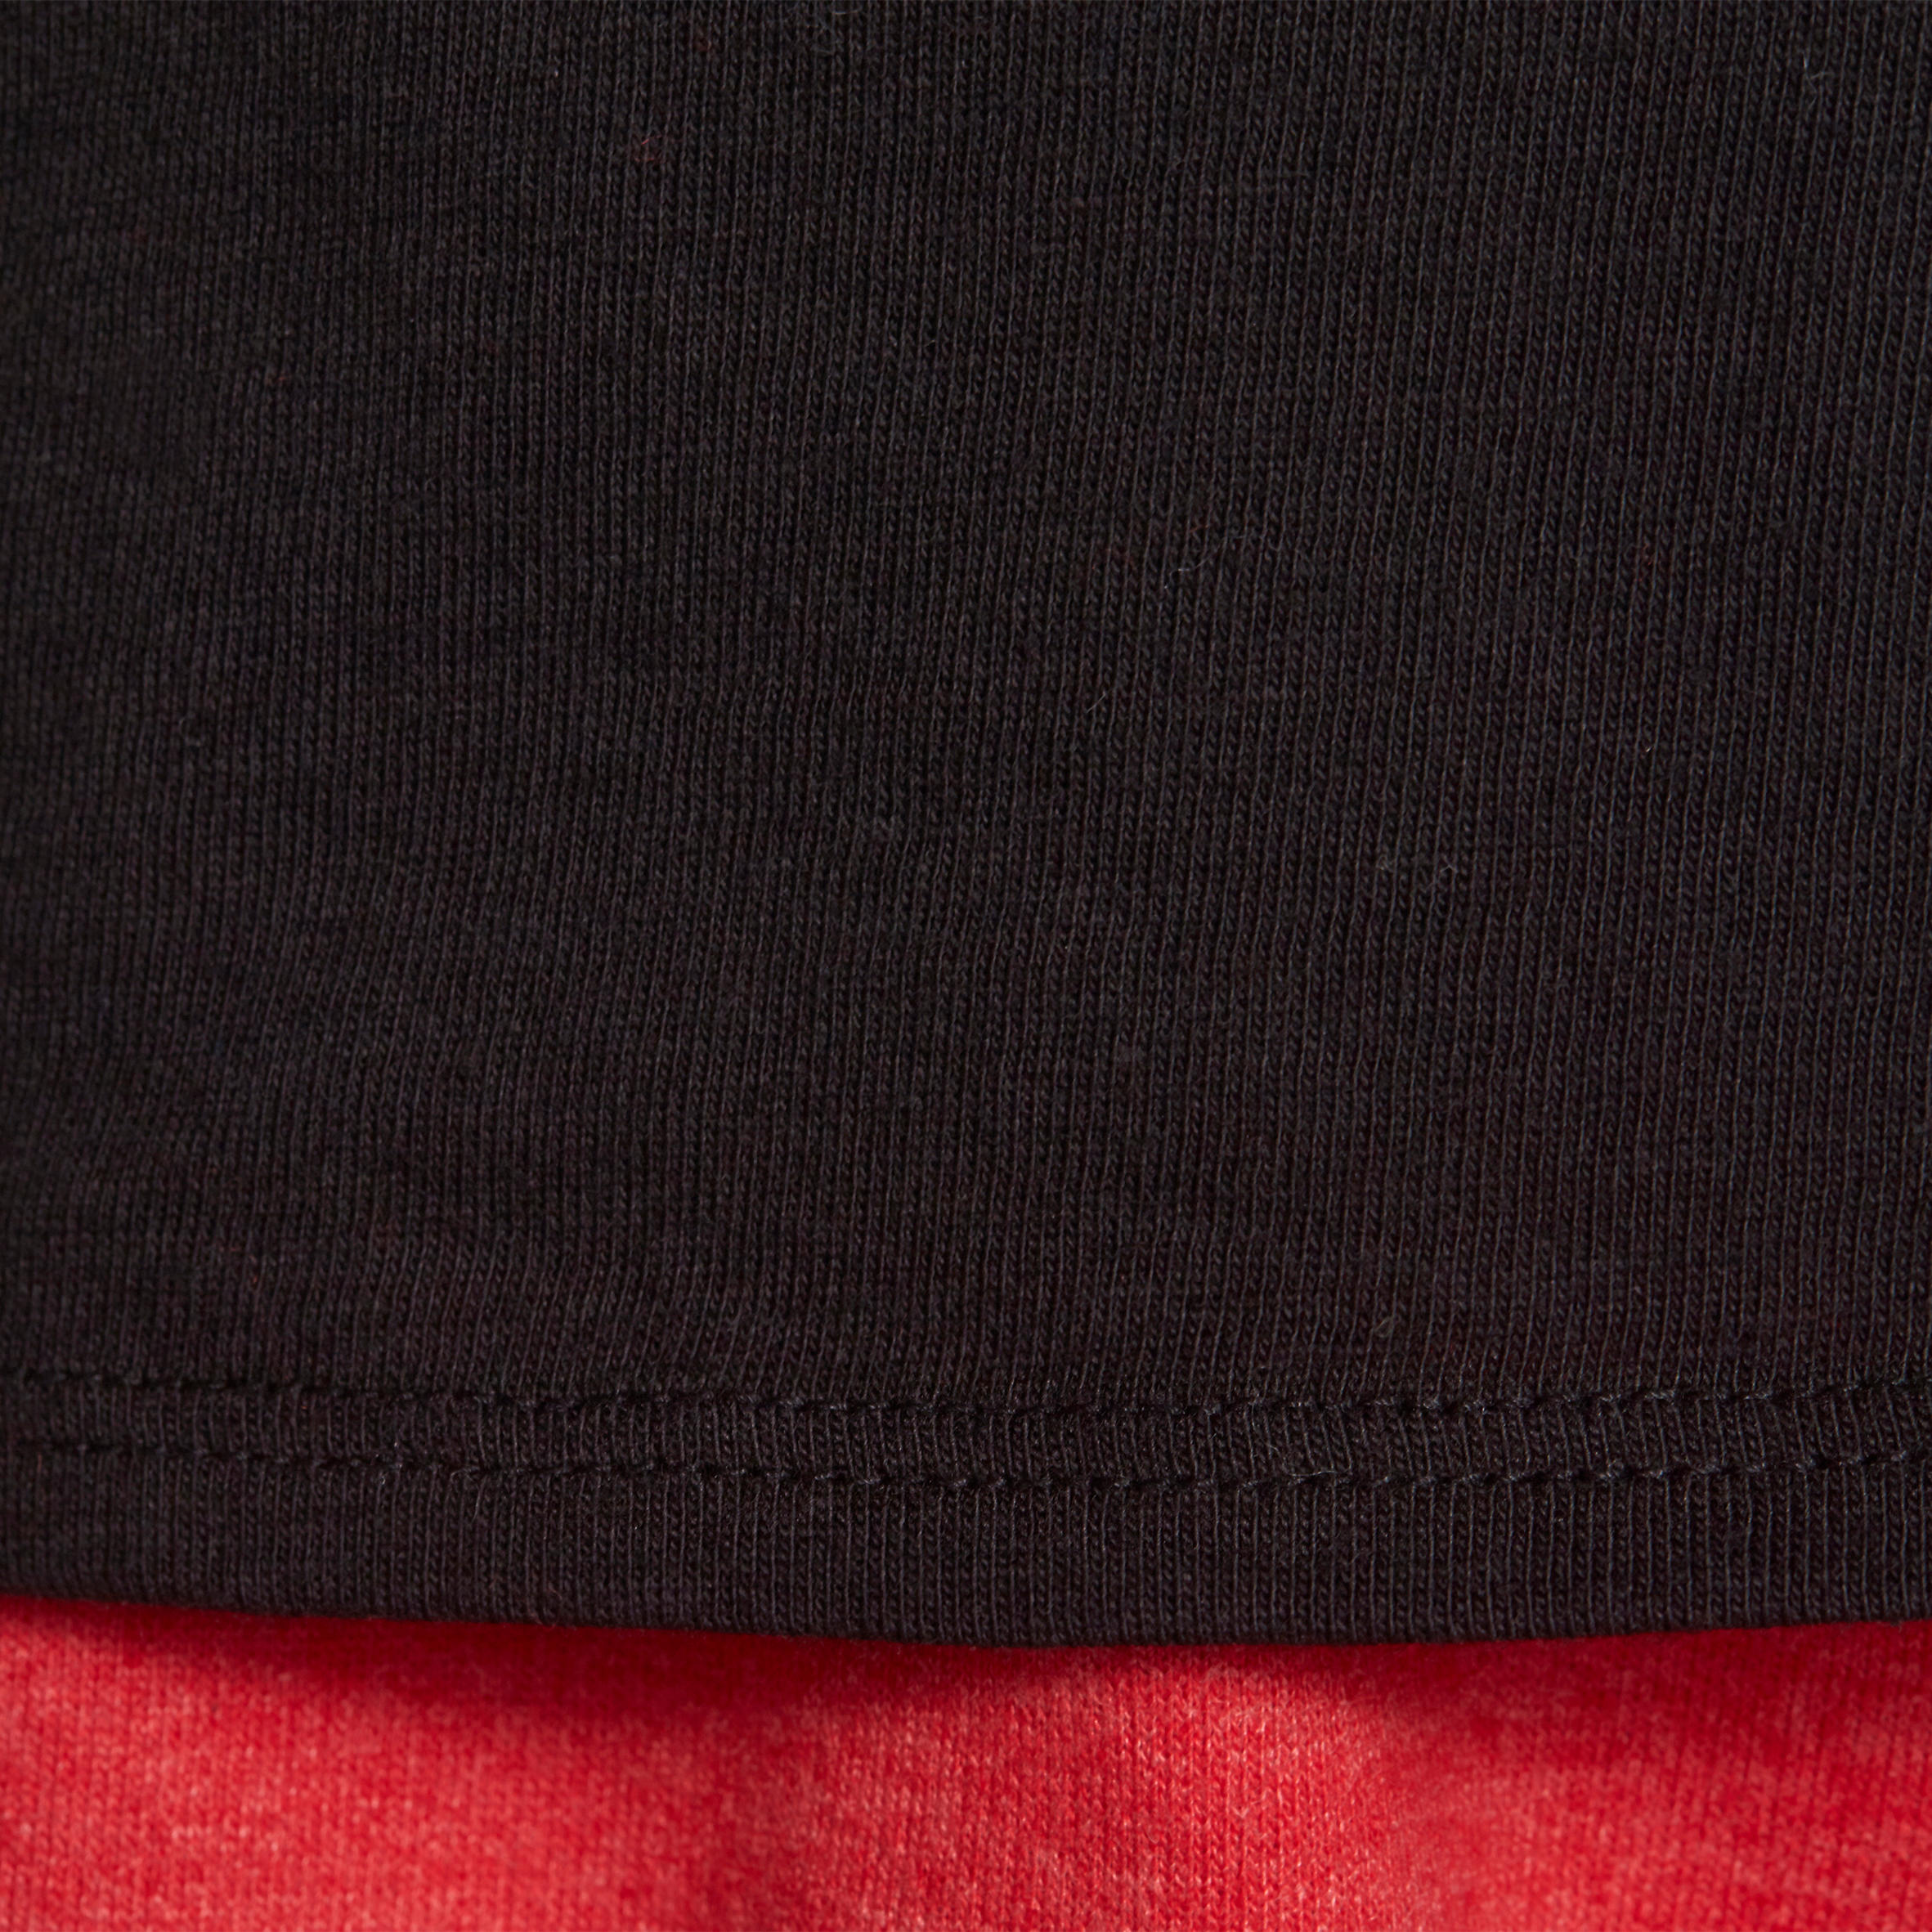 100 Boys' Short-Sleeved Gym T-Shirt - Black 8/8